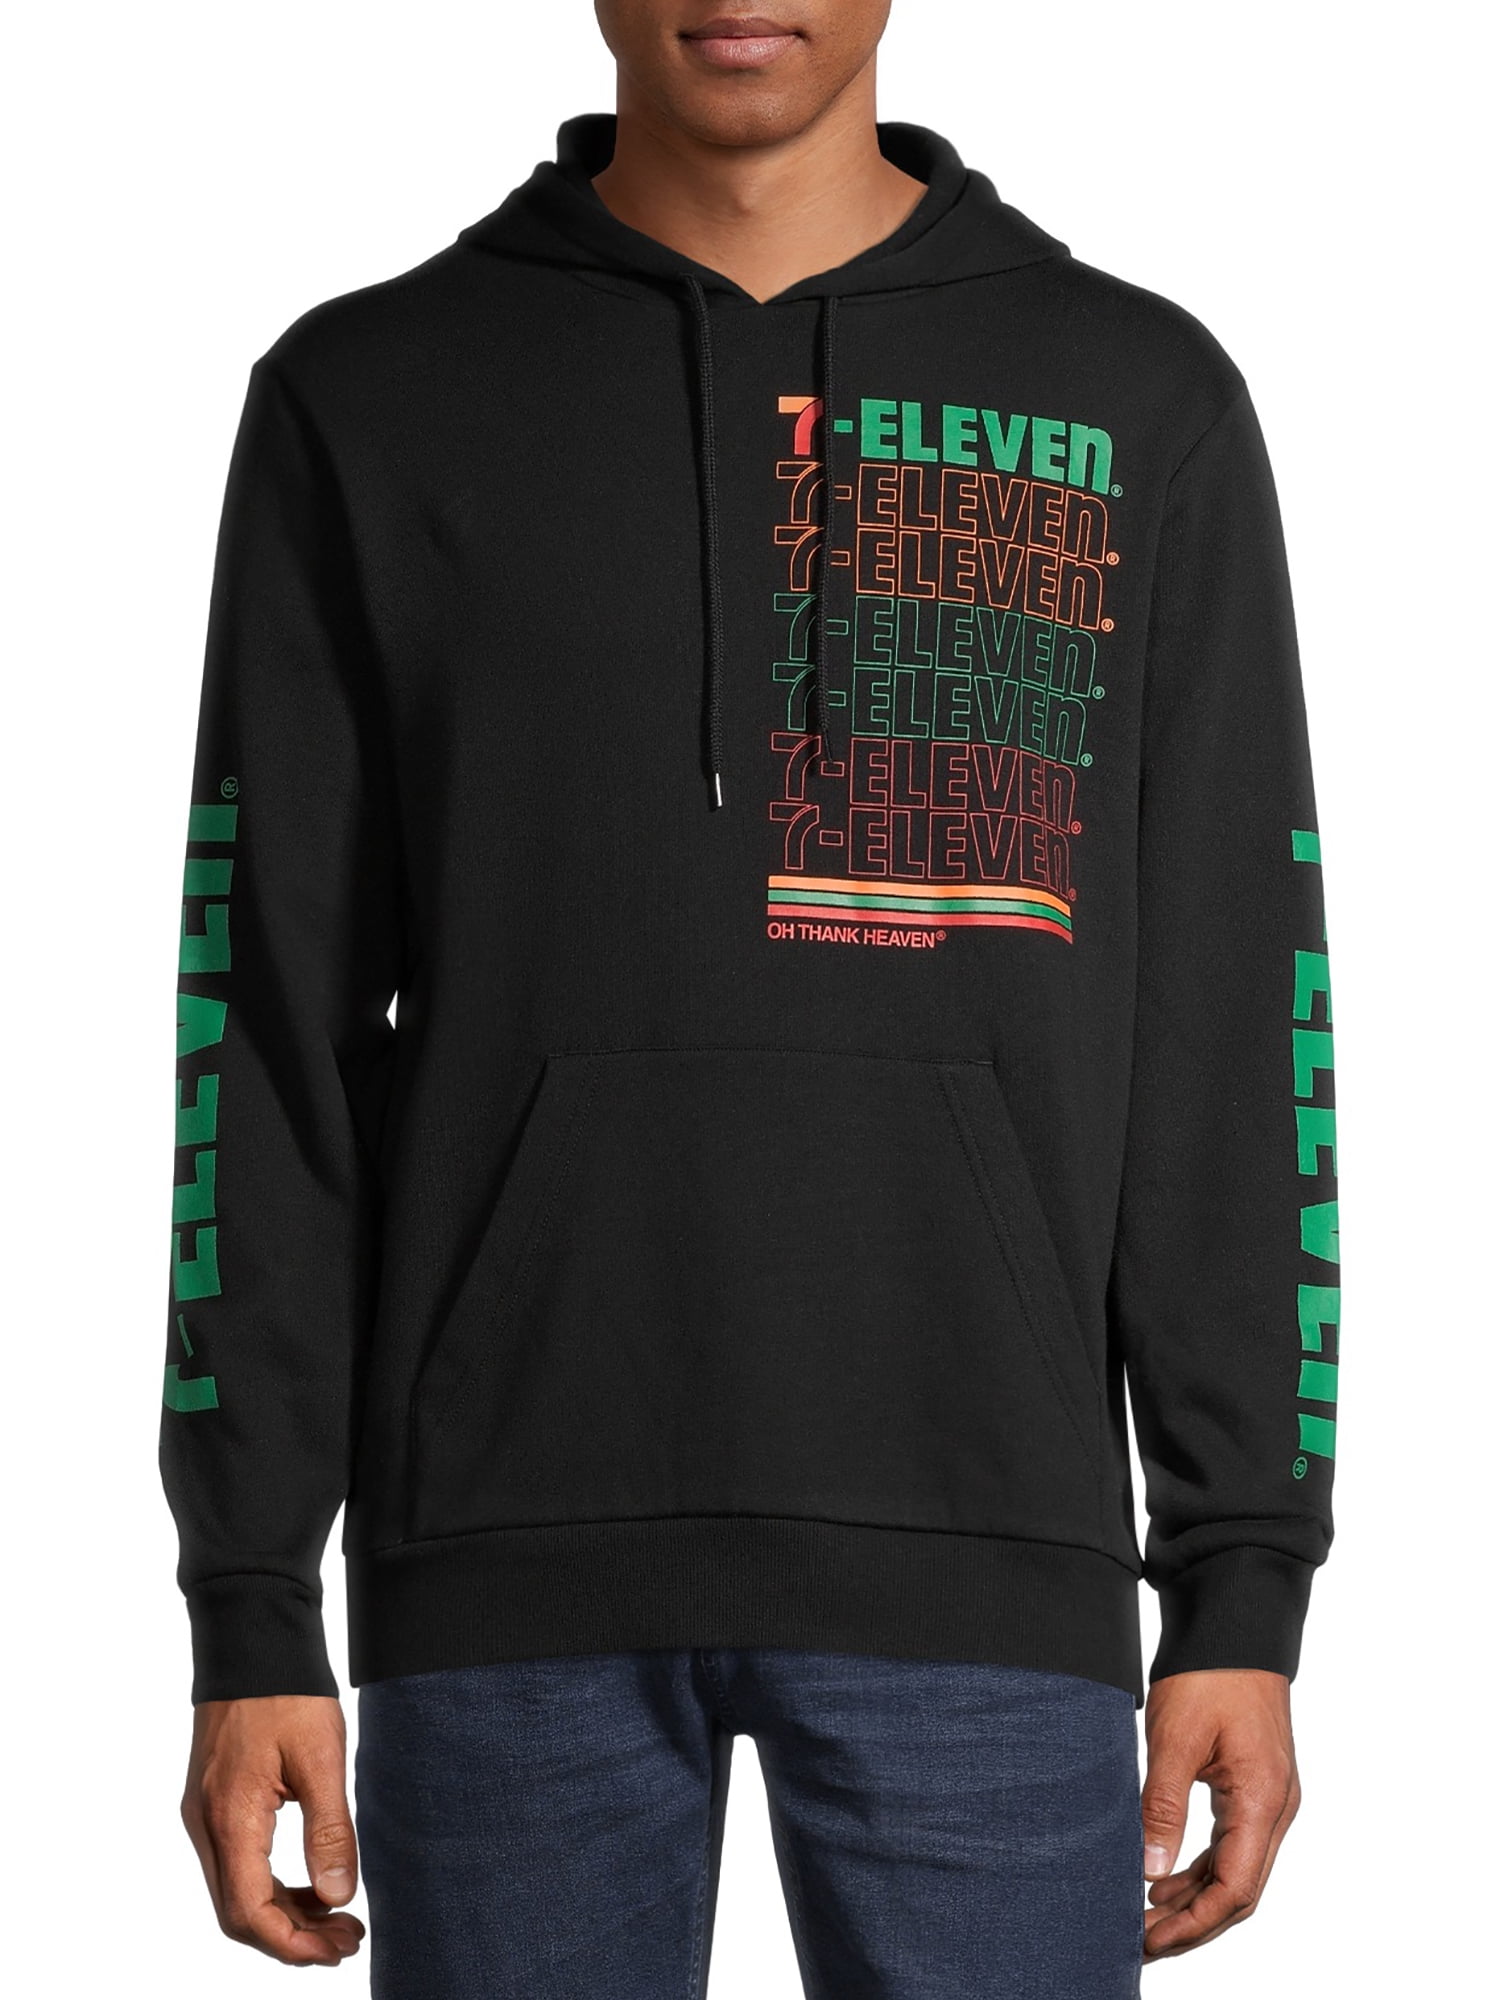 Mens 7 Eleven Long Sleeve Hooded Sweatshirt